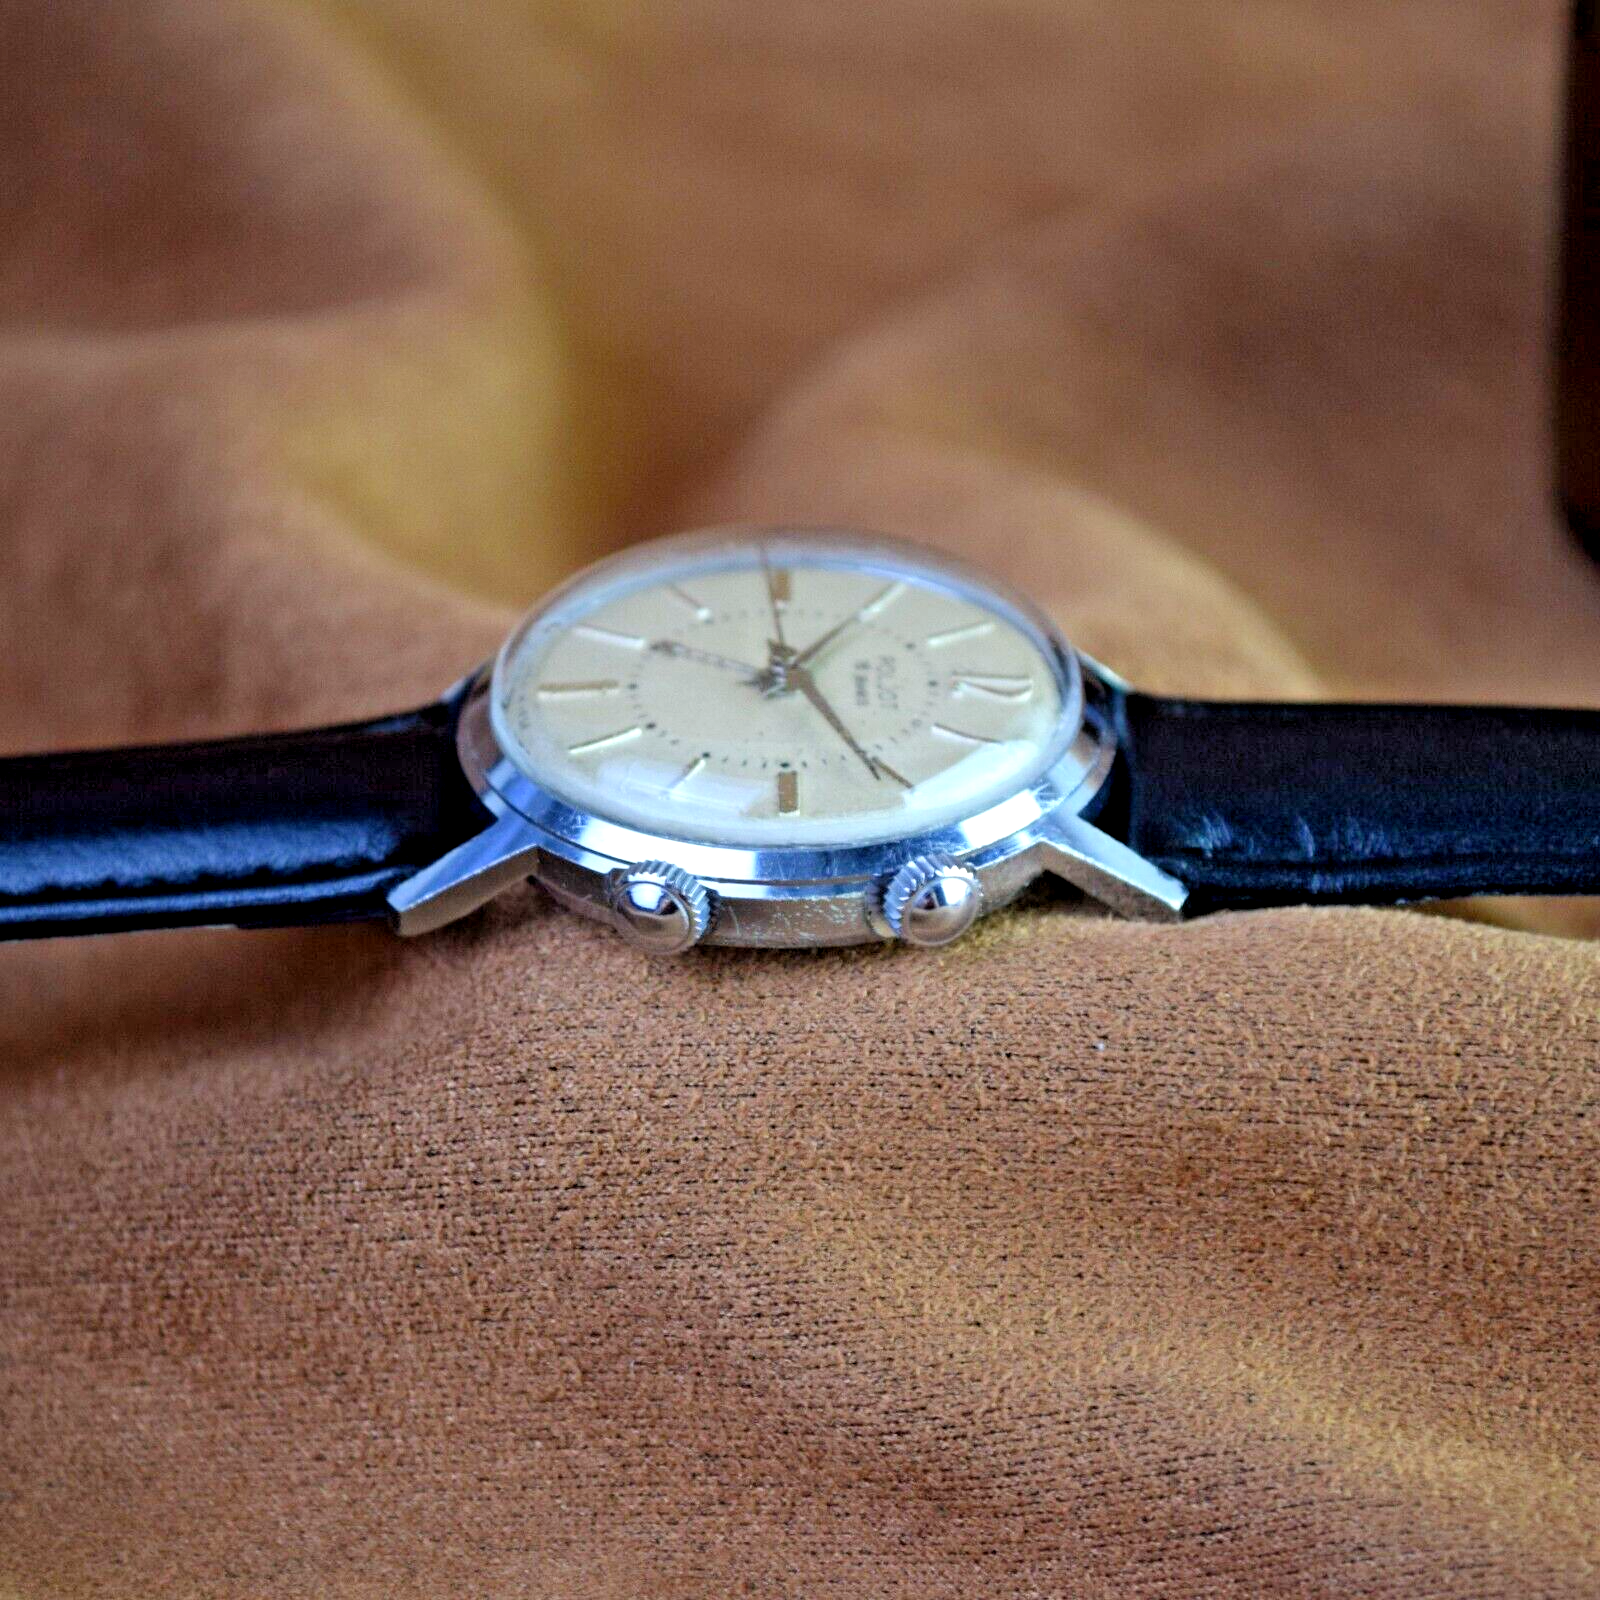 Soviet Wristwatch POLJOT Alarm Signal Vintage Russian USSR Mechanical Mens Watch